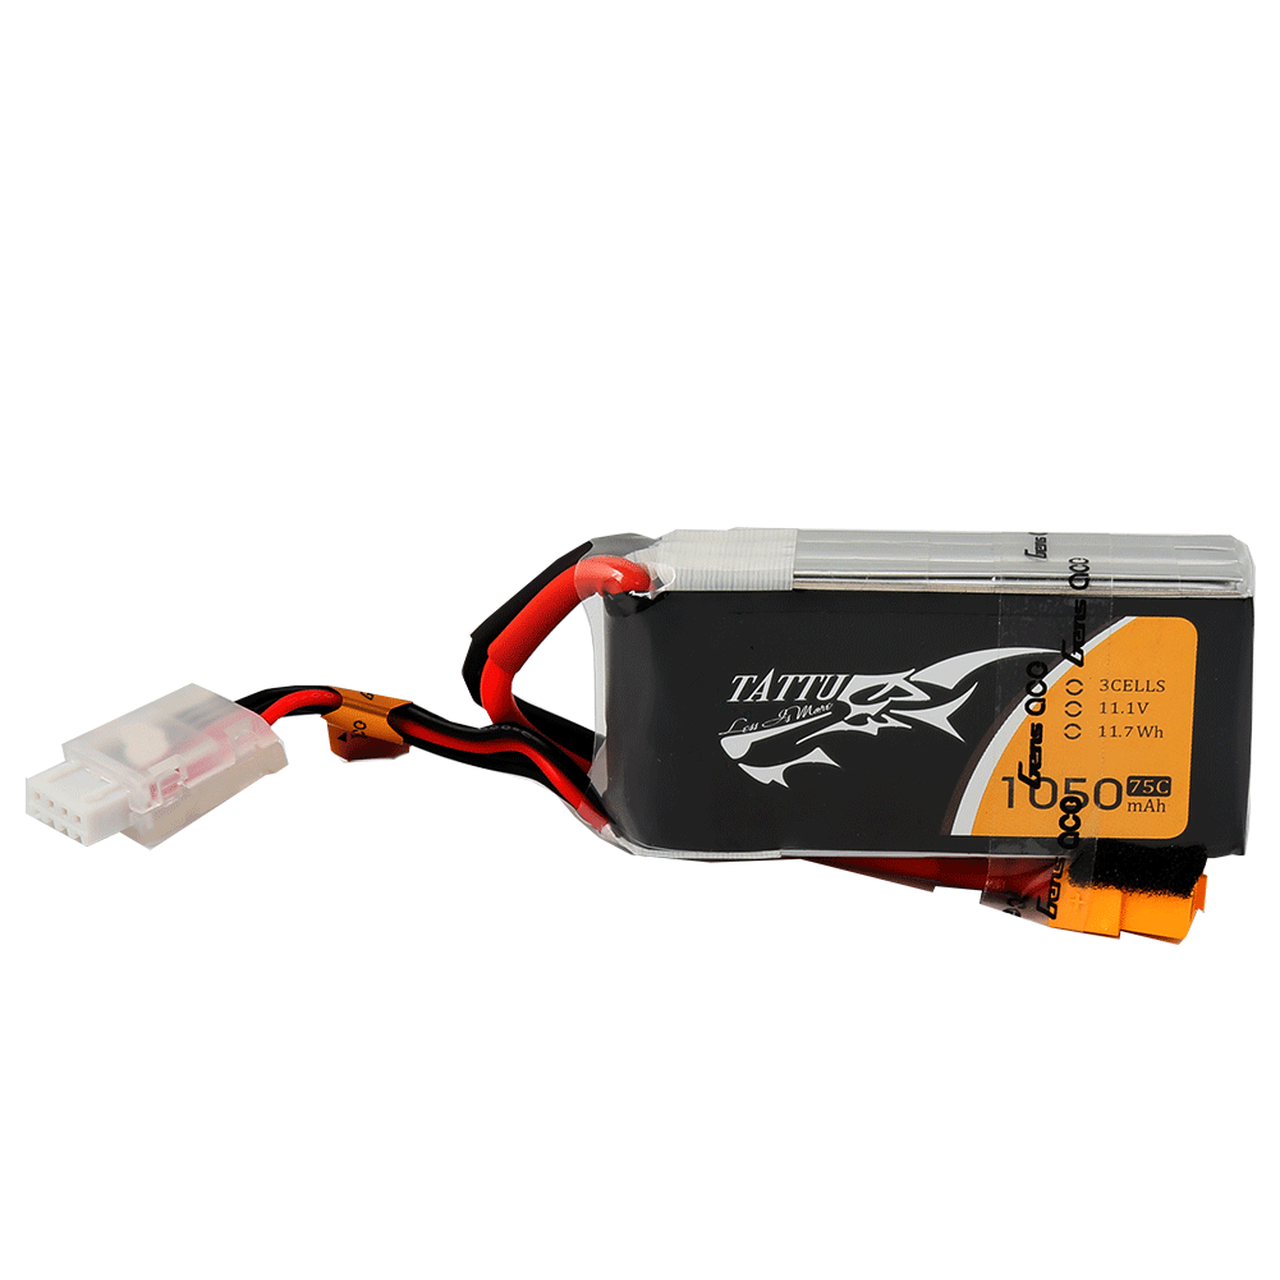 Tattu 1050mAh 11.1V 75C 3S1P Lipo Battery Pack with XT60 Plug